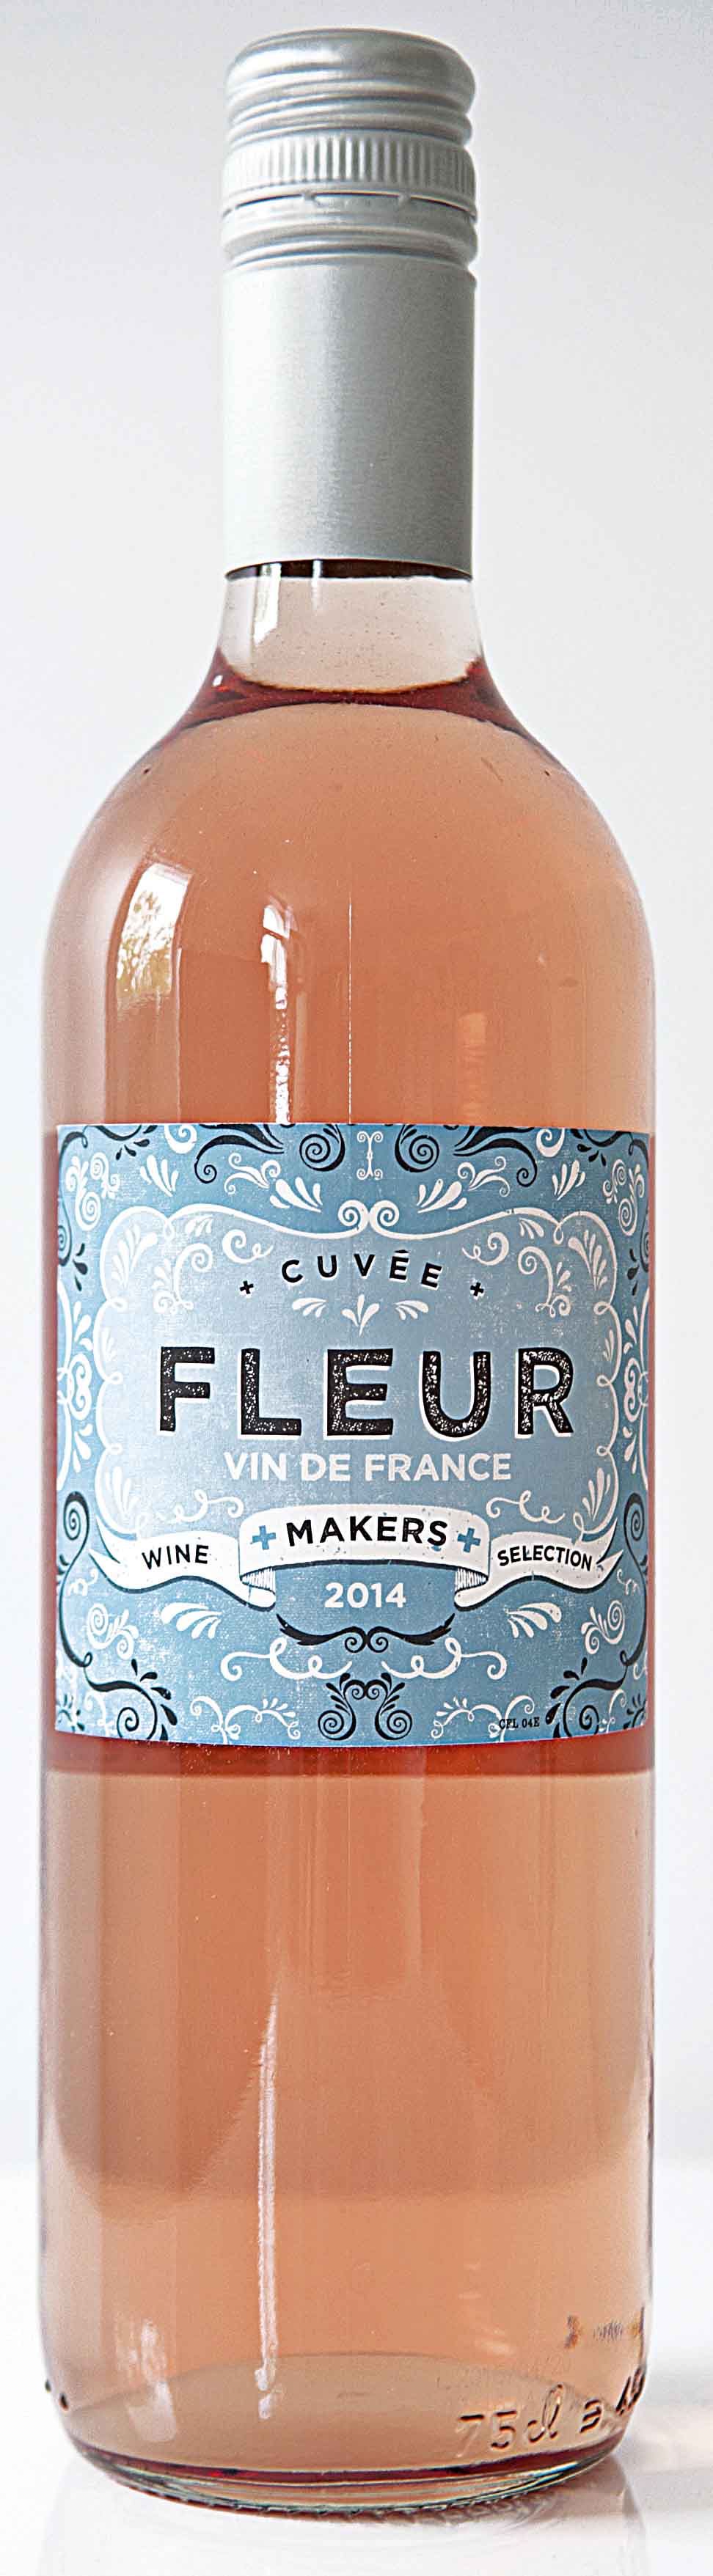 Cuvee Fleur 2014, France £4.99